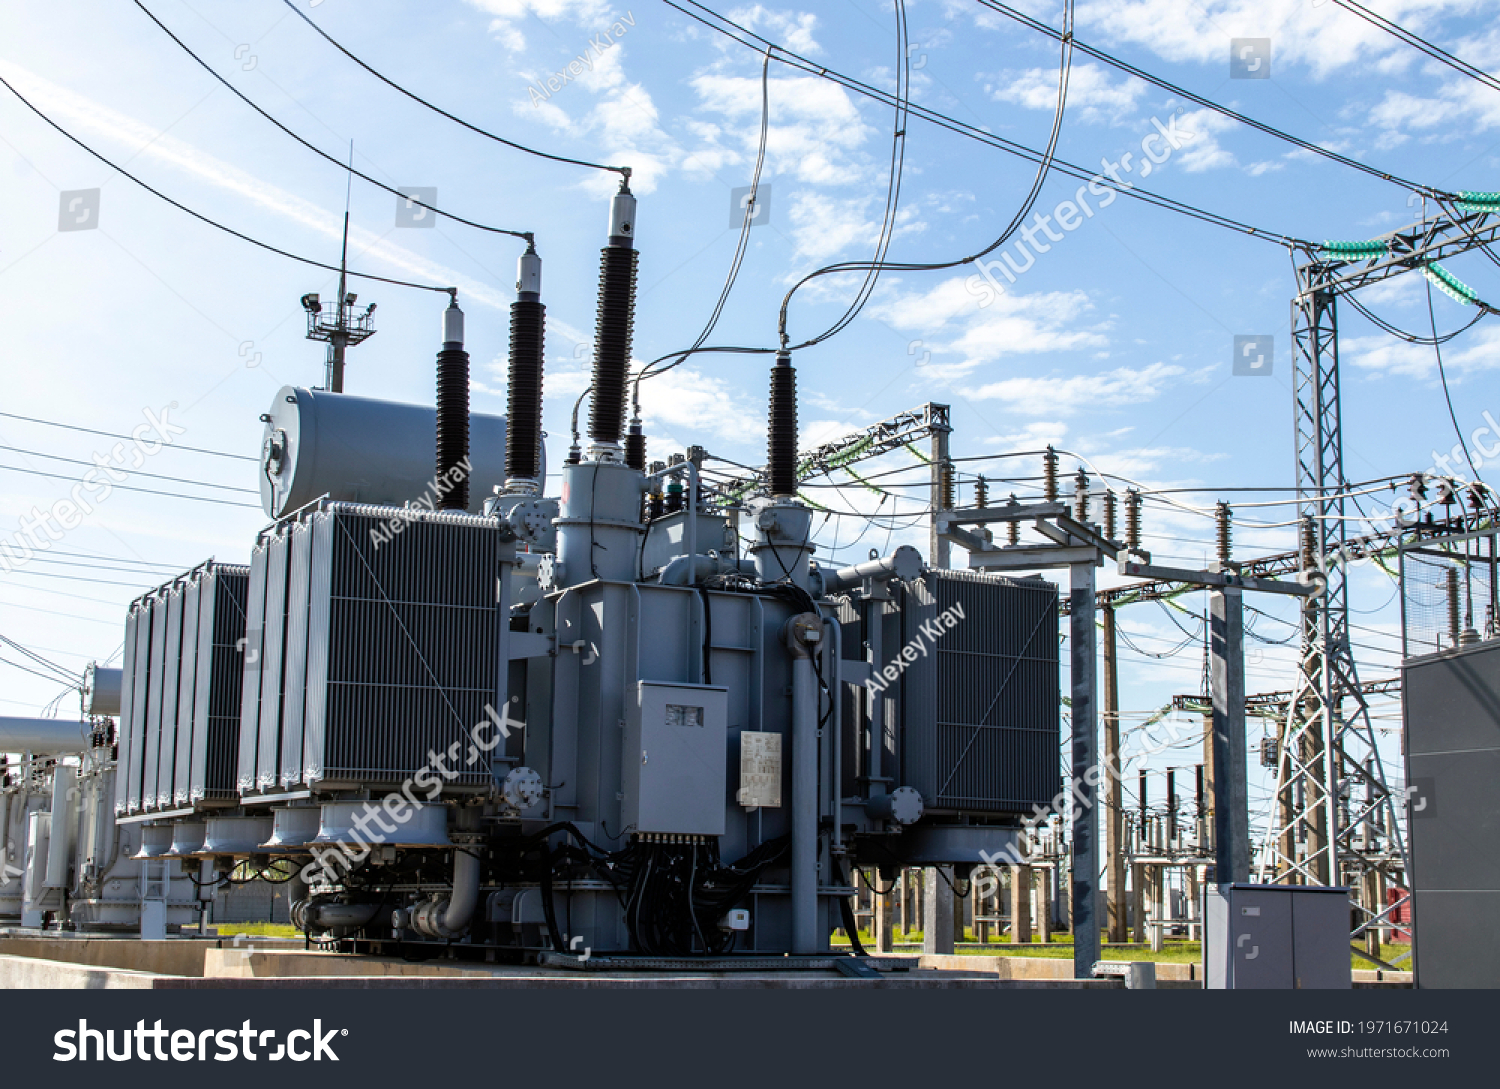 High voltage transformer against the blue sky. Electric current redistribution substation
 #1971671024